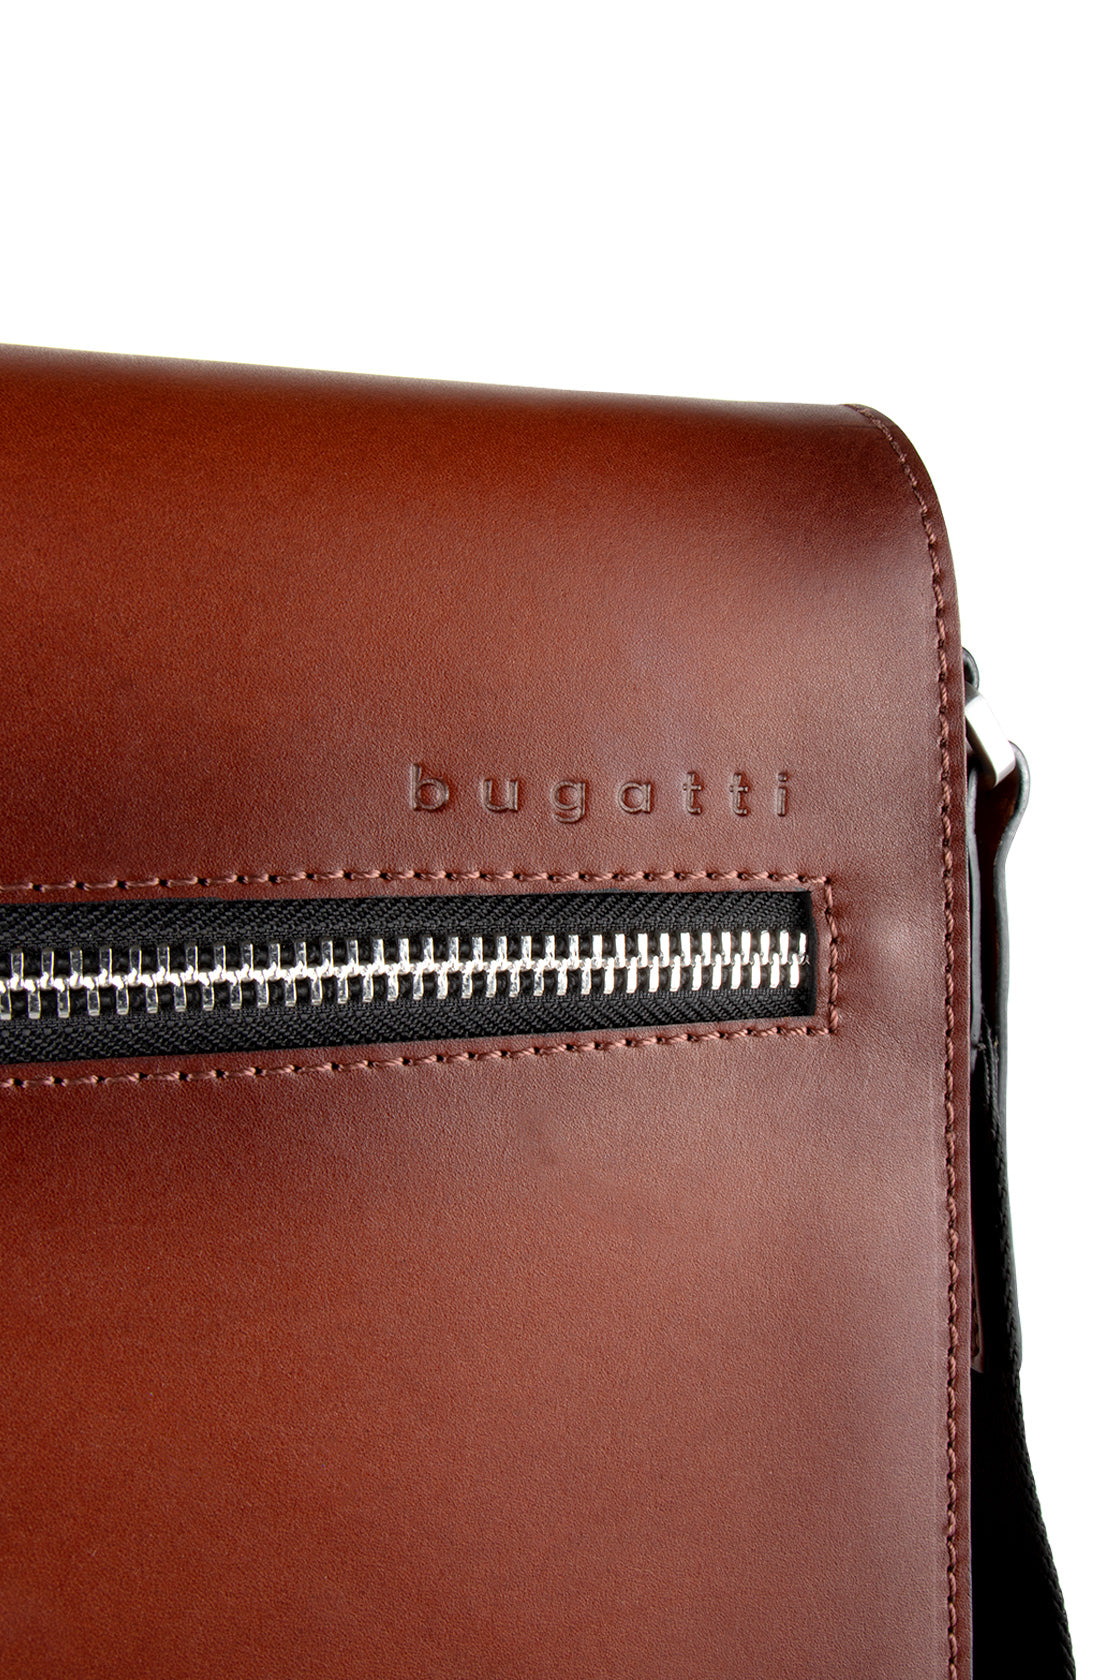 Bugatti Domus Crossbody Bag Cognac